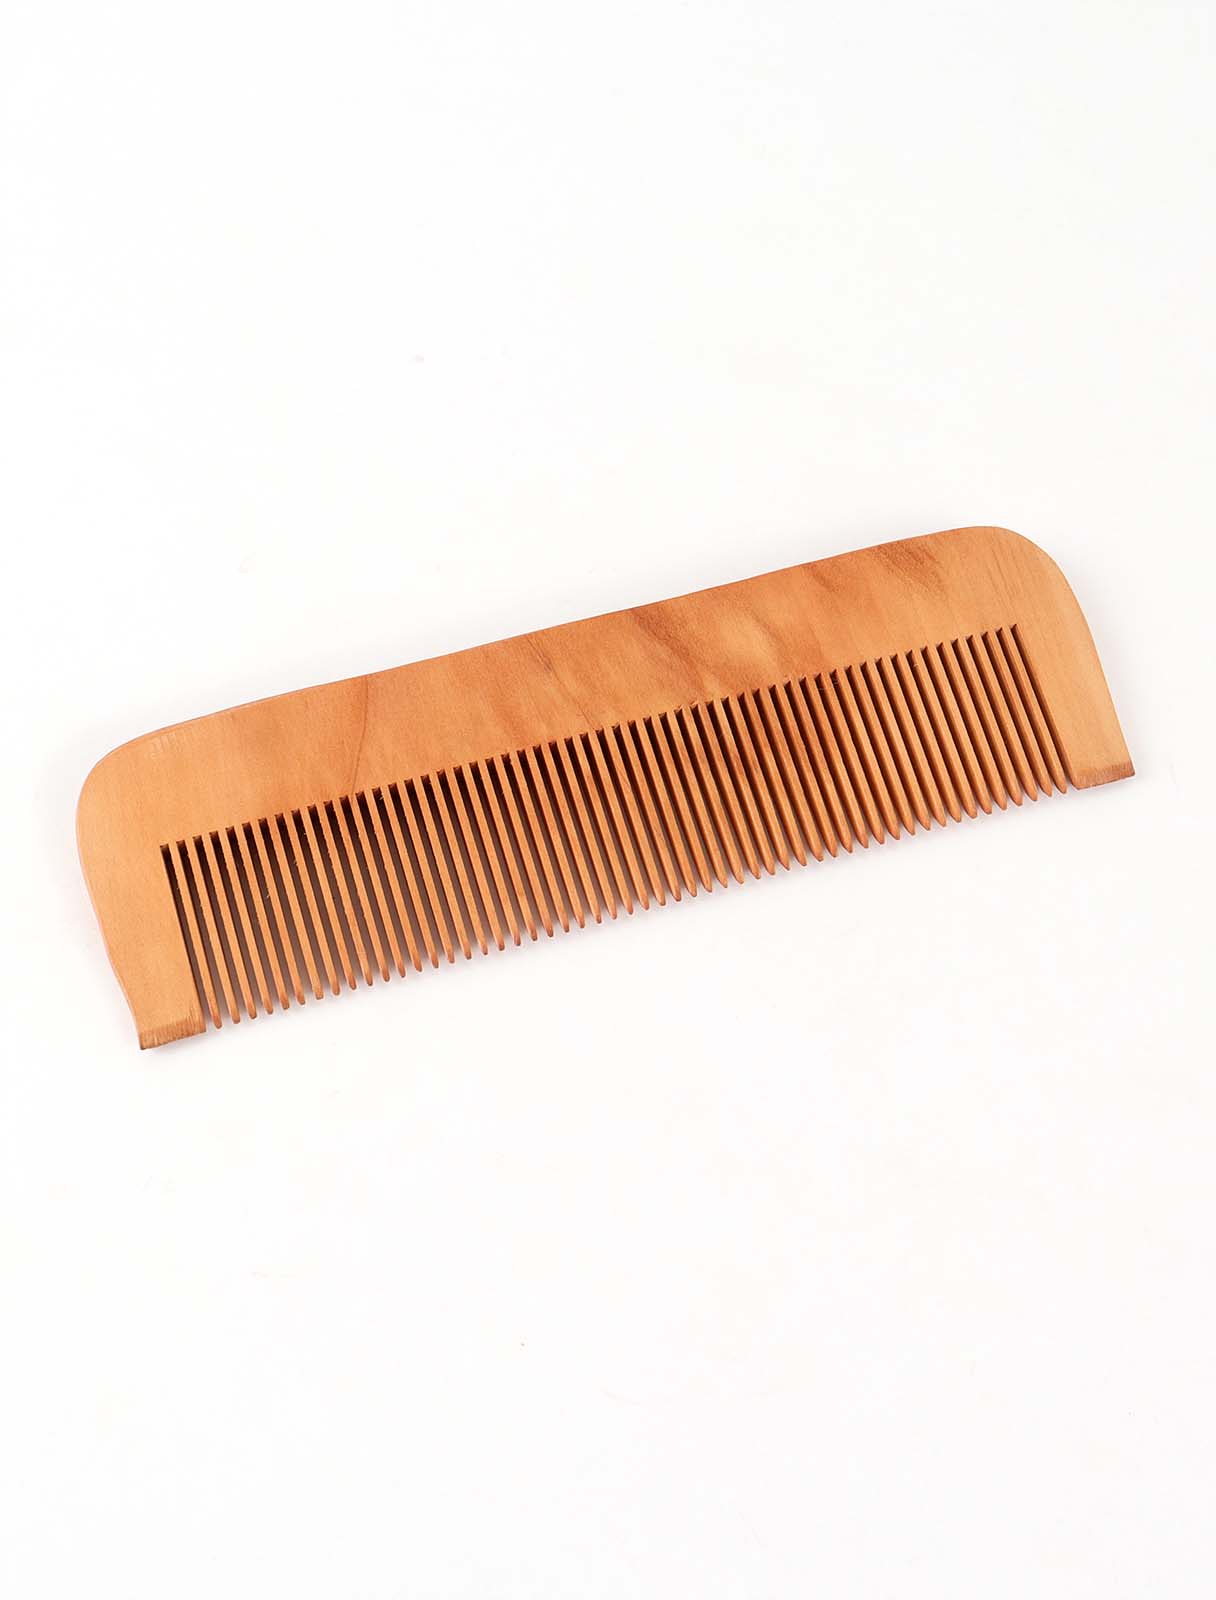 A natural wood comb in a rectangular shape